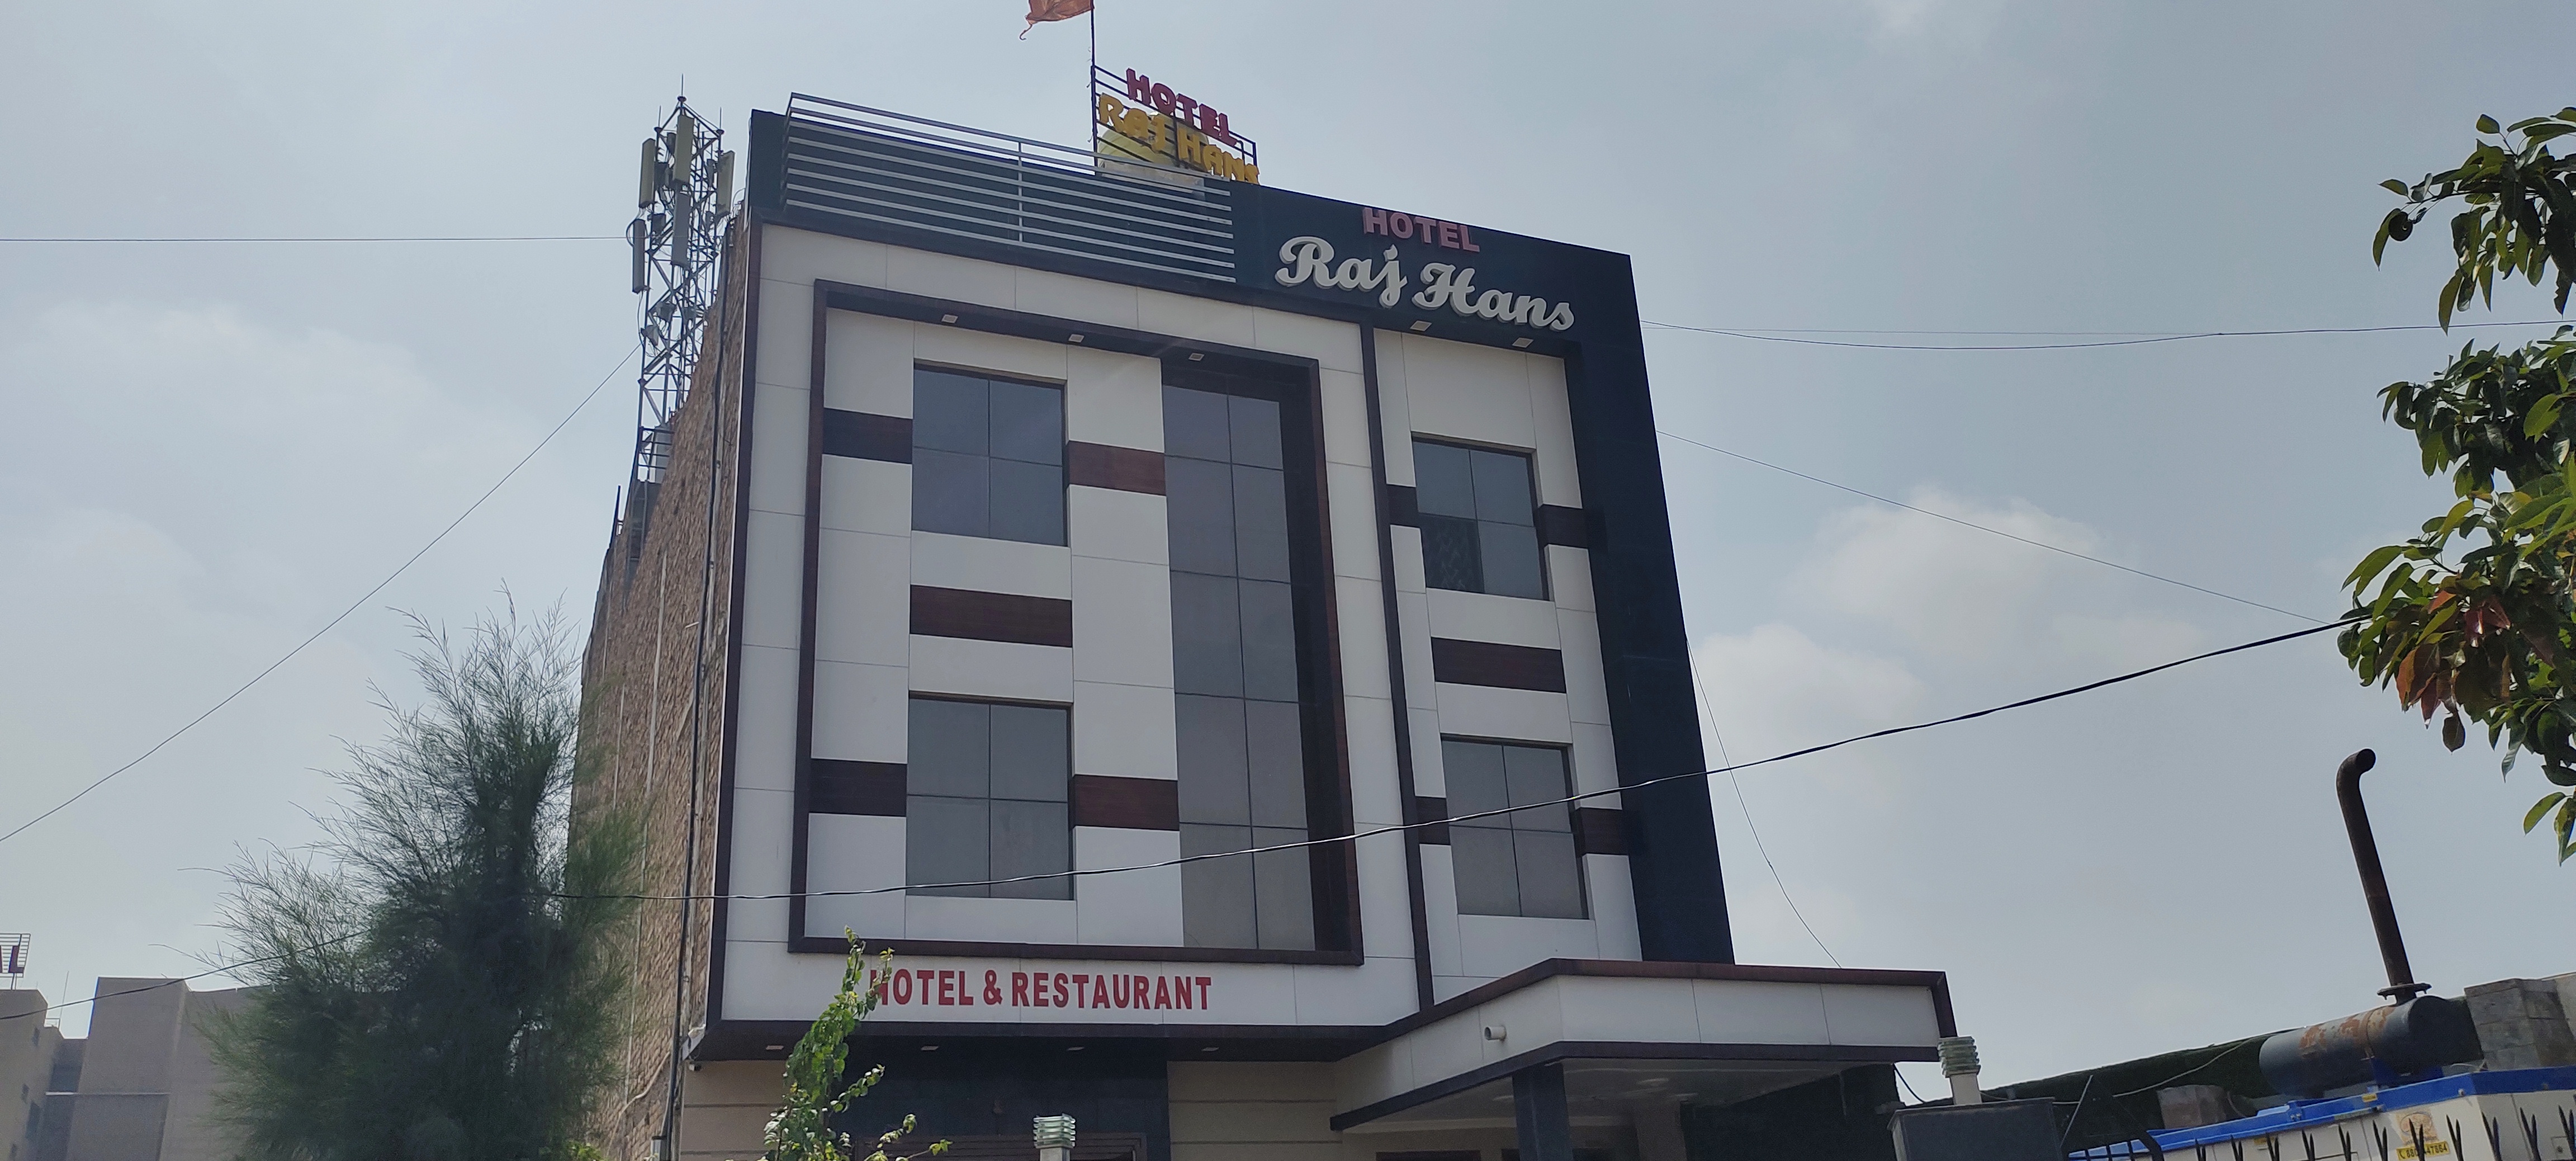 Hotel Raj Hans Review - A Mixed Bag of Experiences in Sri Ganganagar